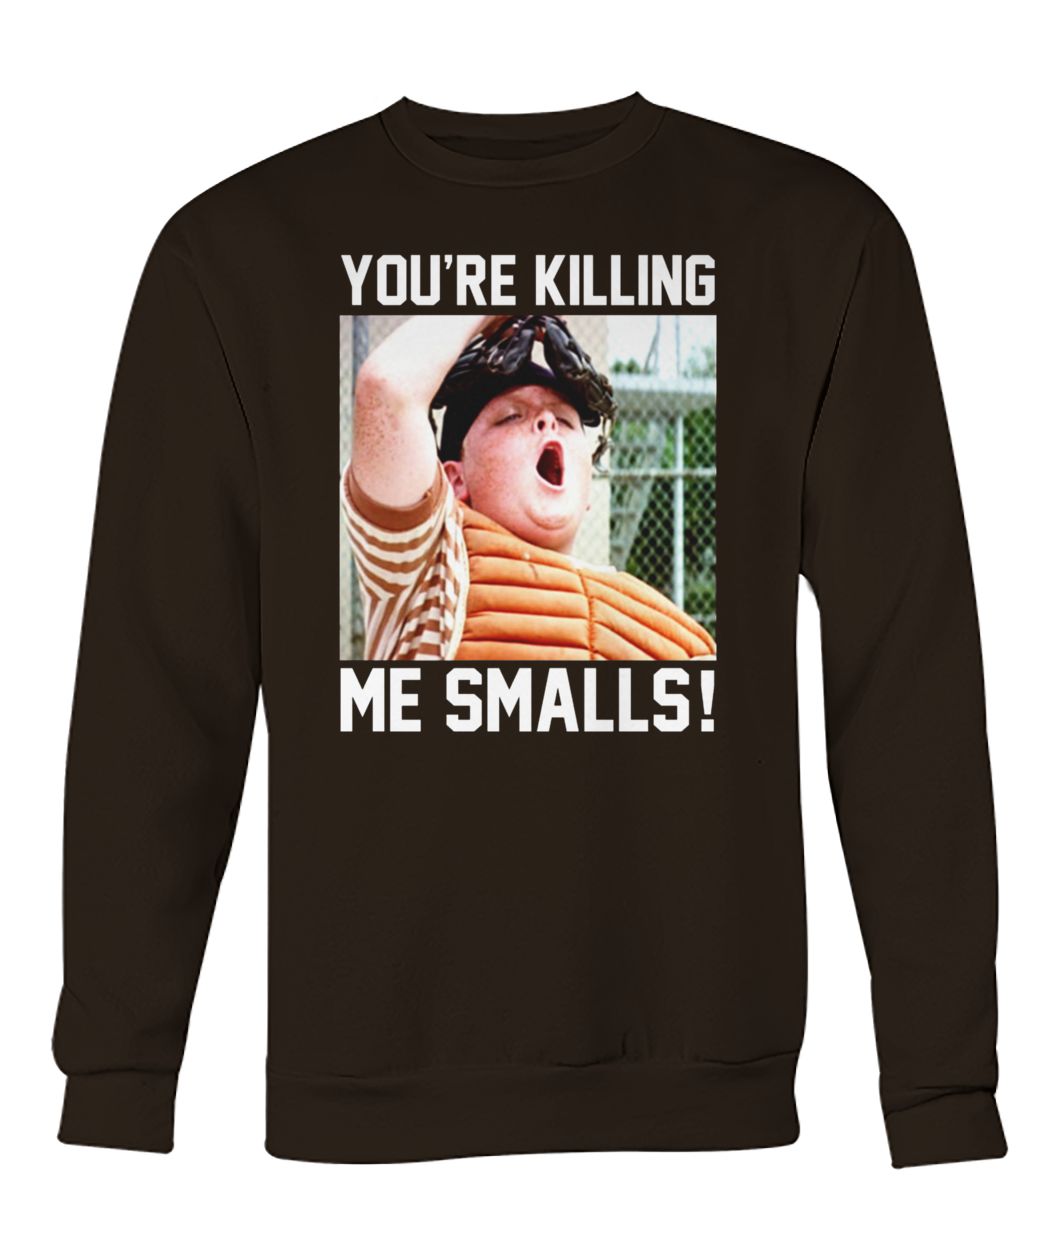 Klay thompson you're killing me smalls crew neck sweatshirt